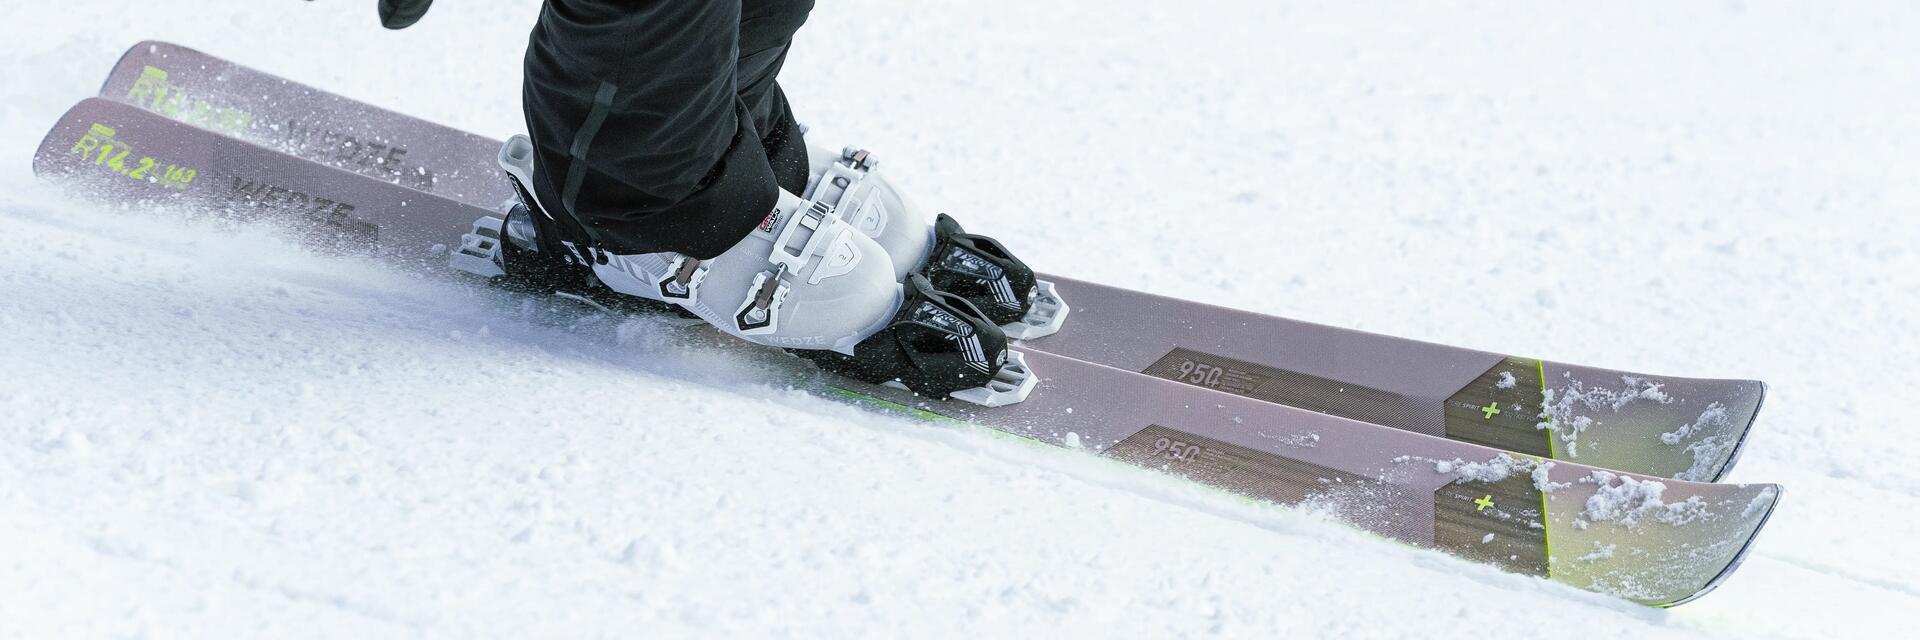 Choisir sa tenue de ski, conseils techniques, Magazine